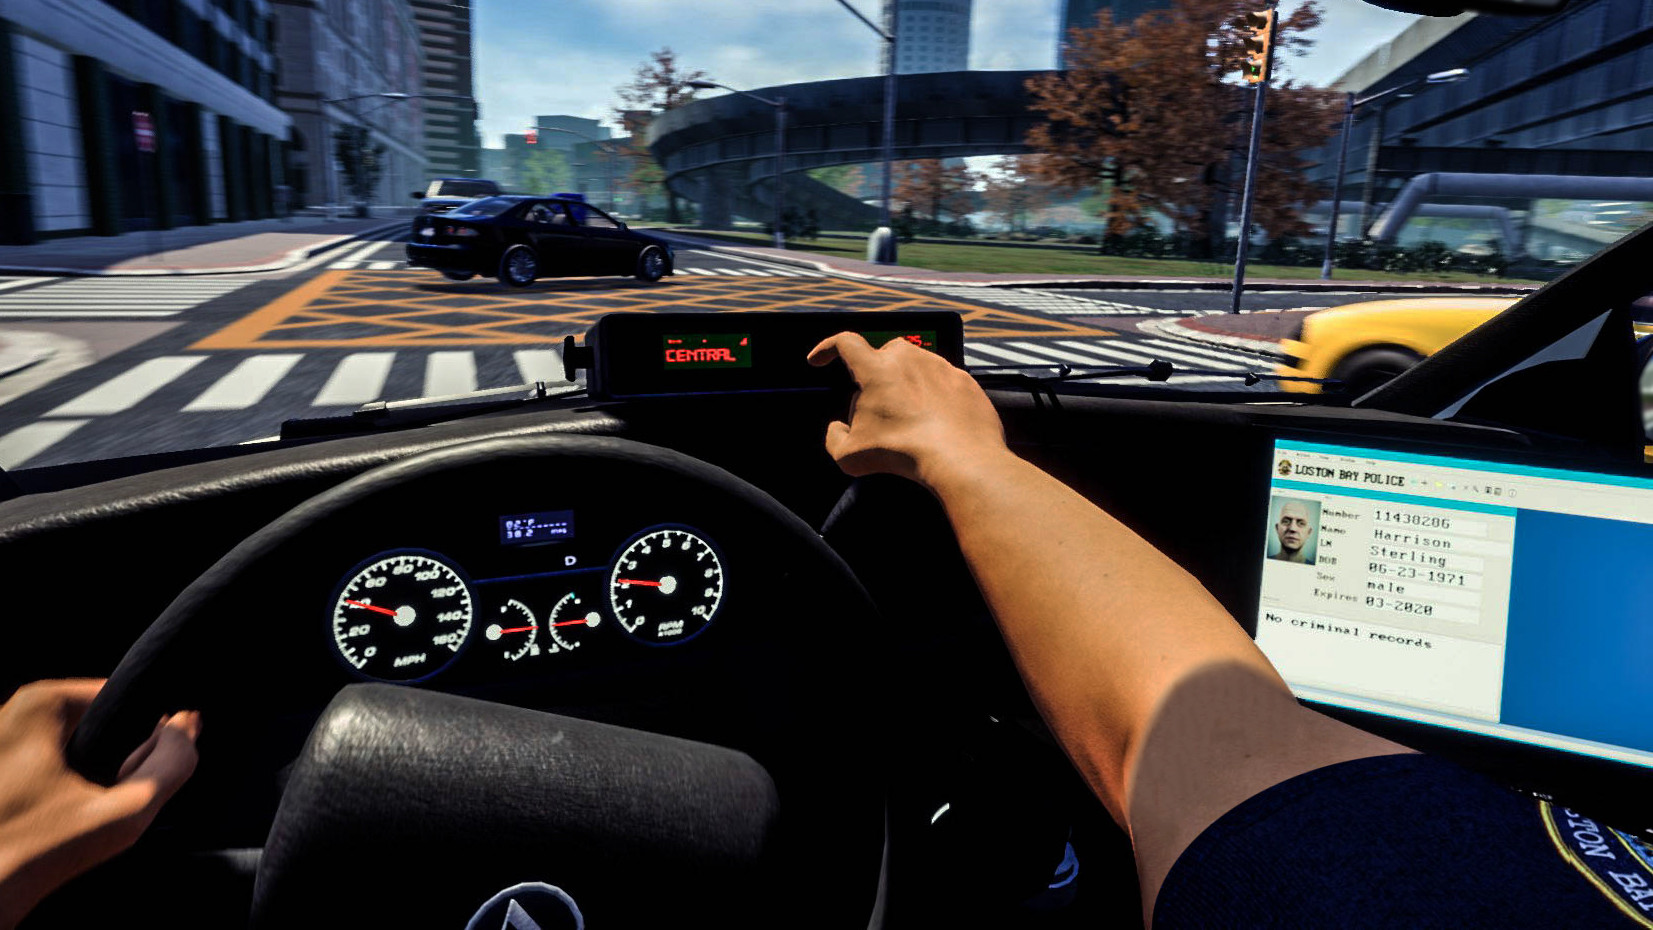 Police Simulator: Patrol Duty screenshot